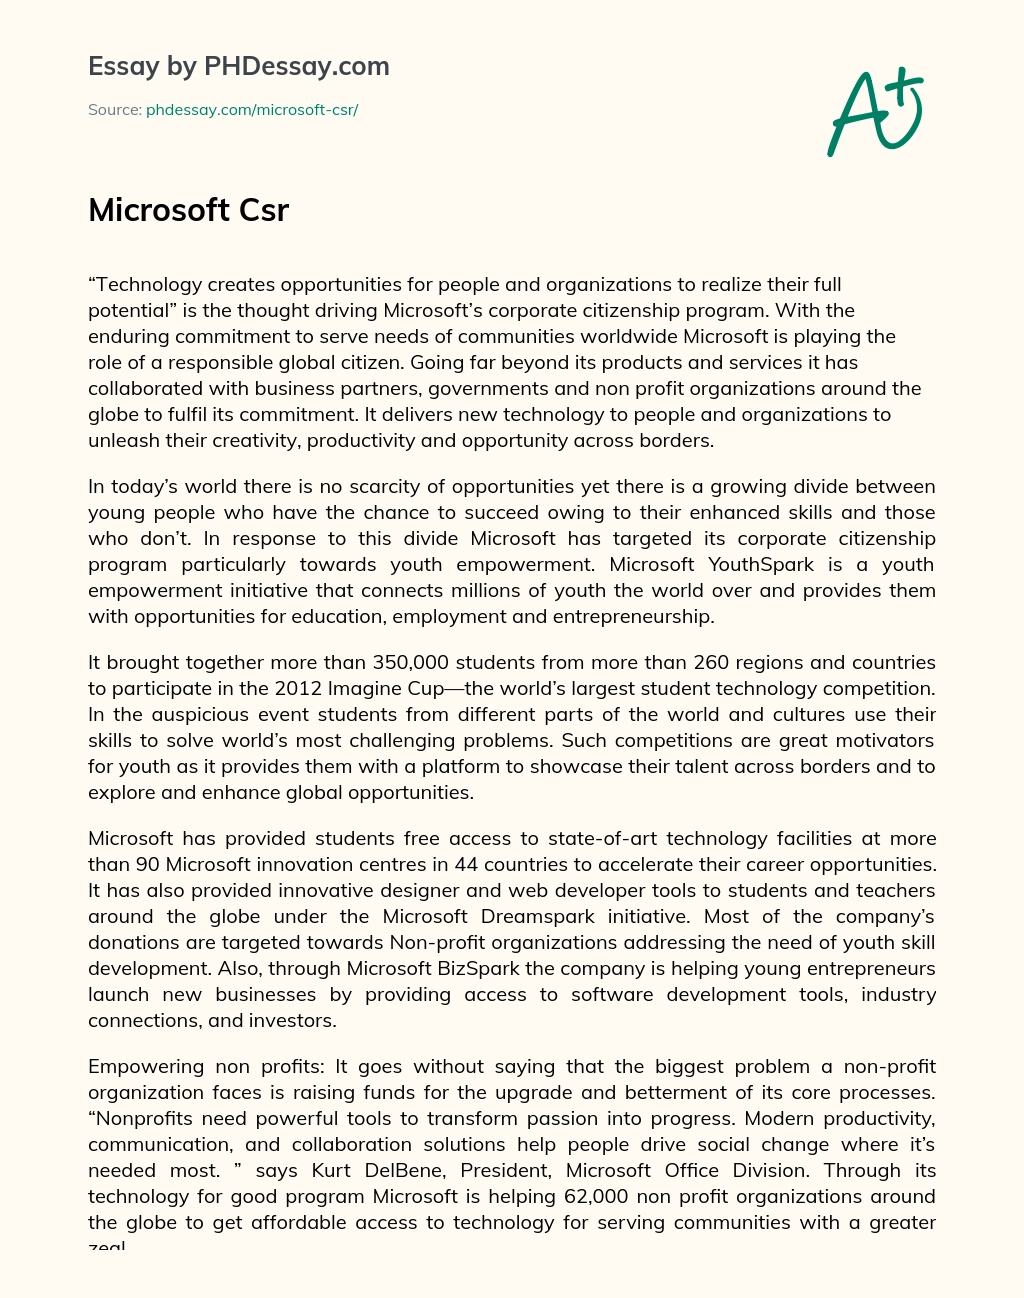 Microsoft Csr essay